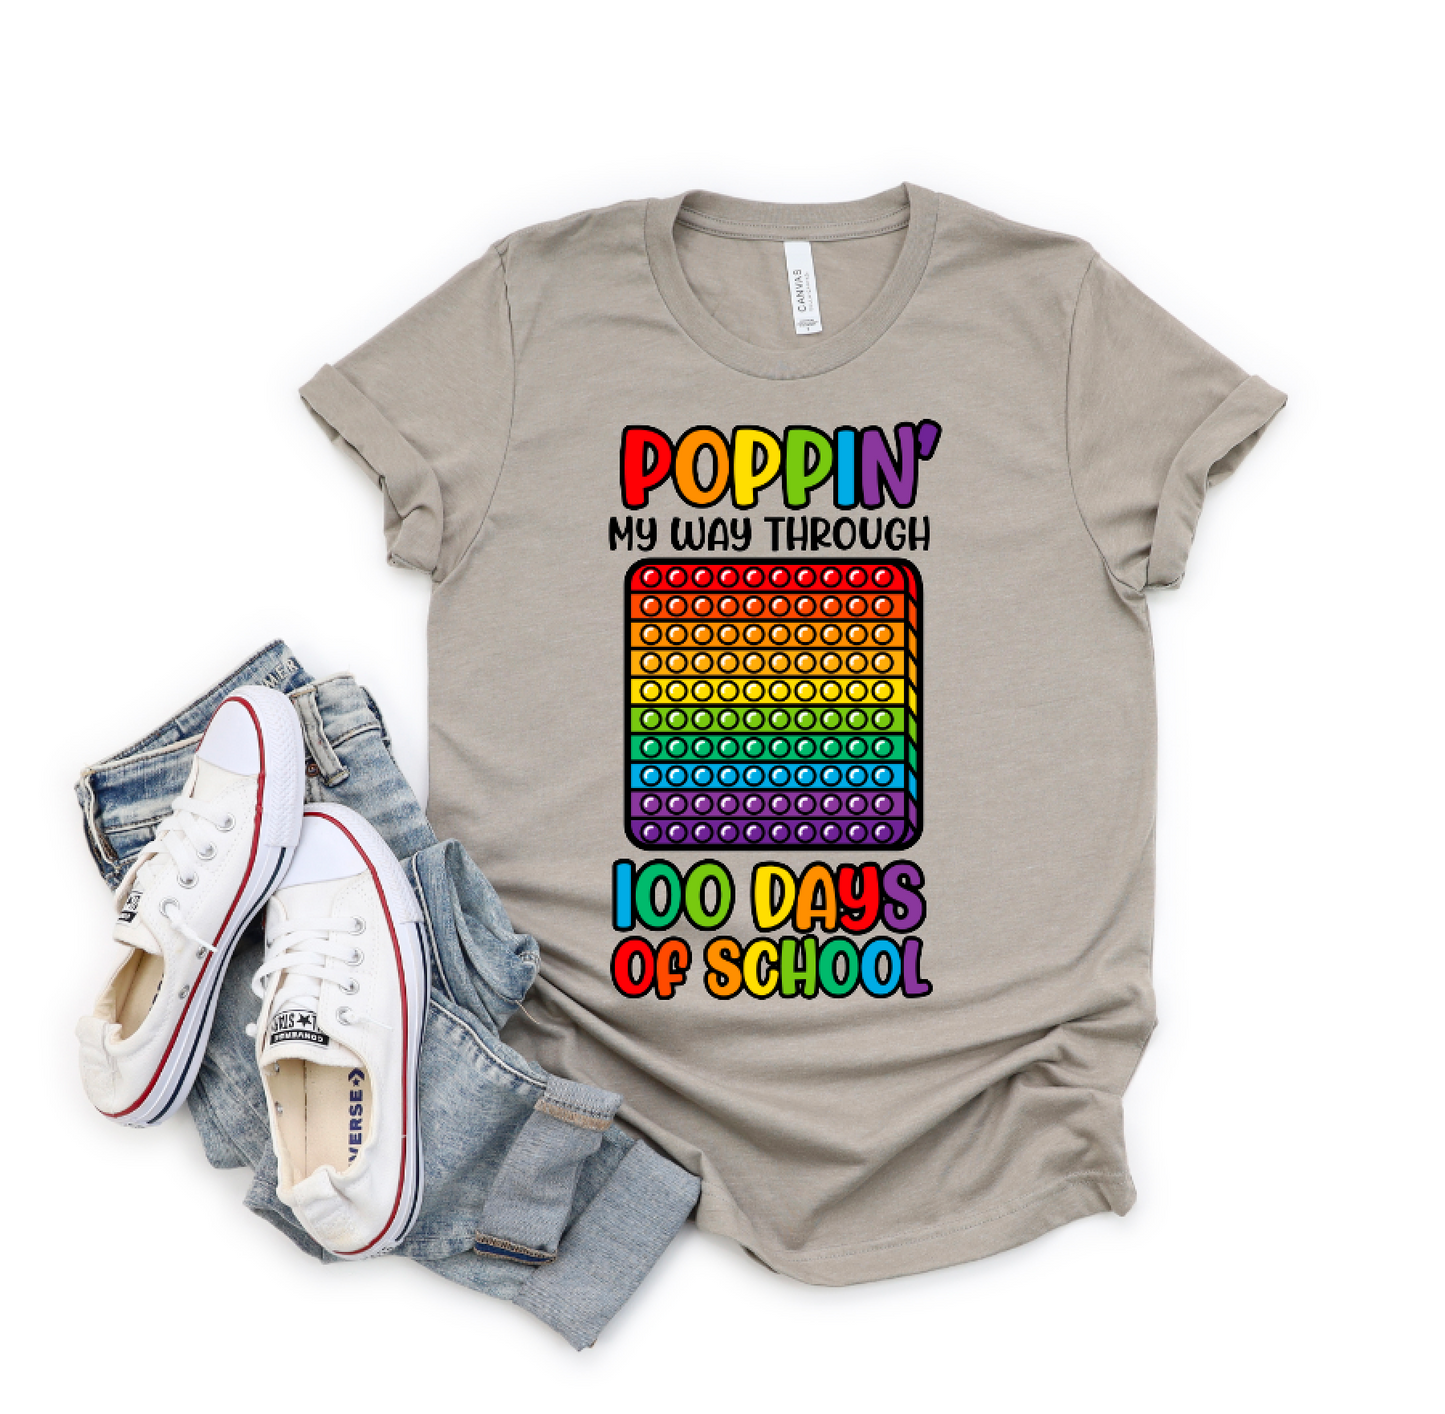 Poppin' My Way Through 100 Days of School || Popper Hundredth Day Shirt